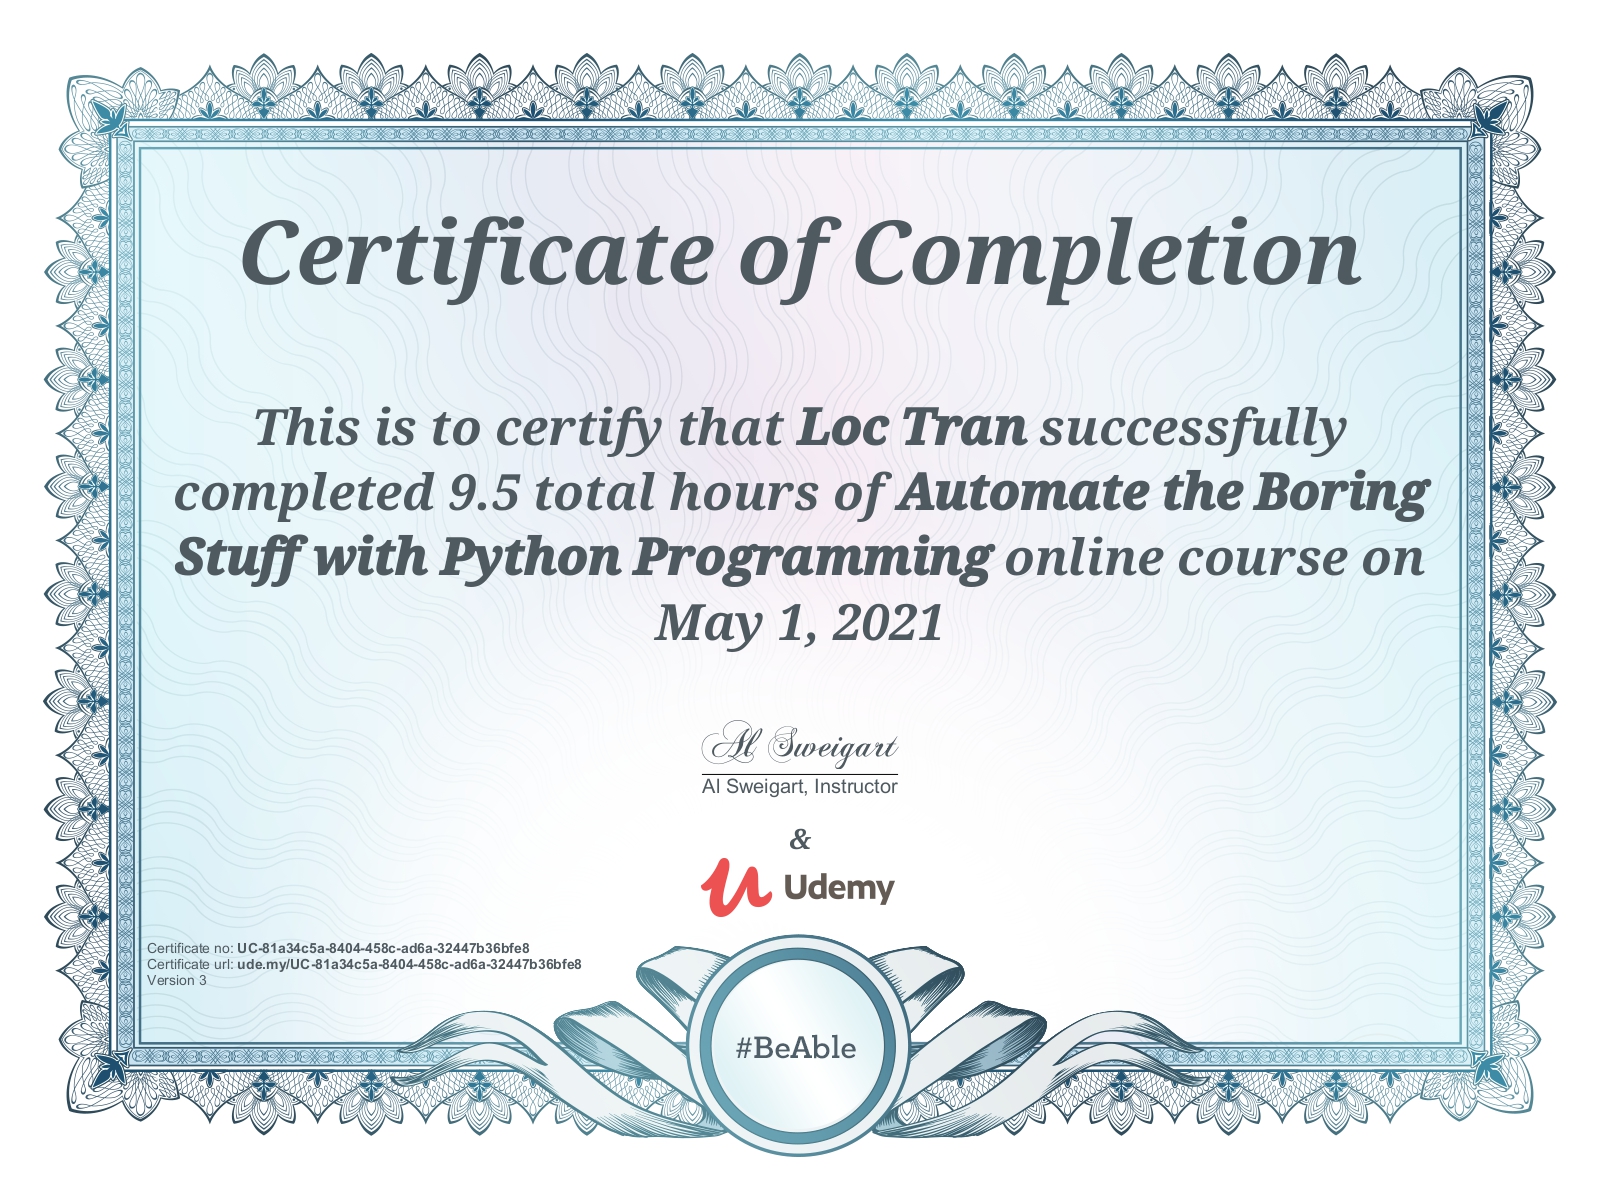 Loc Tran - Automate the Boring Stuff with Python Programming